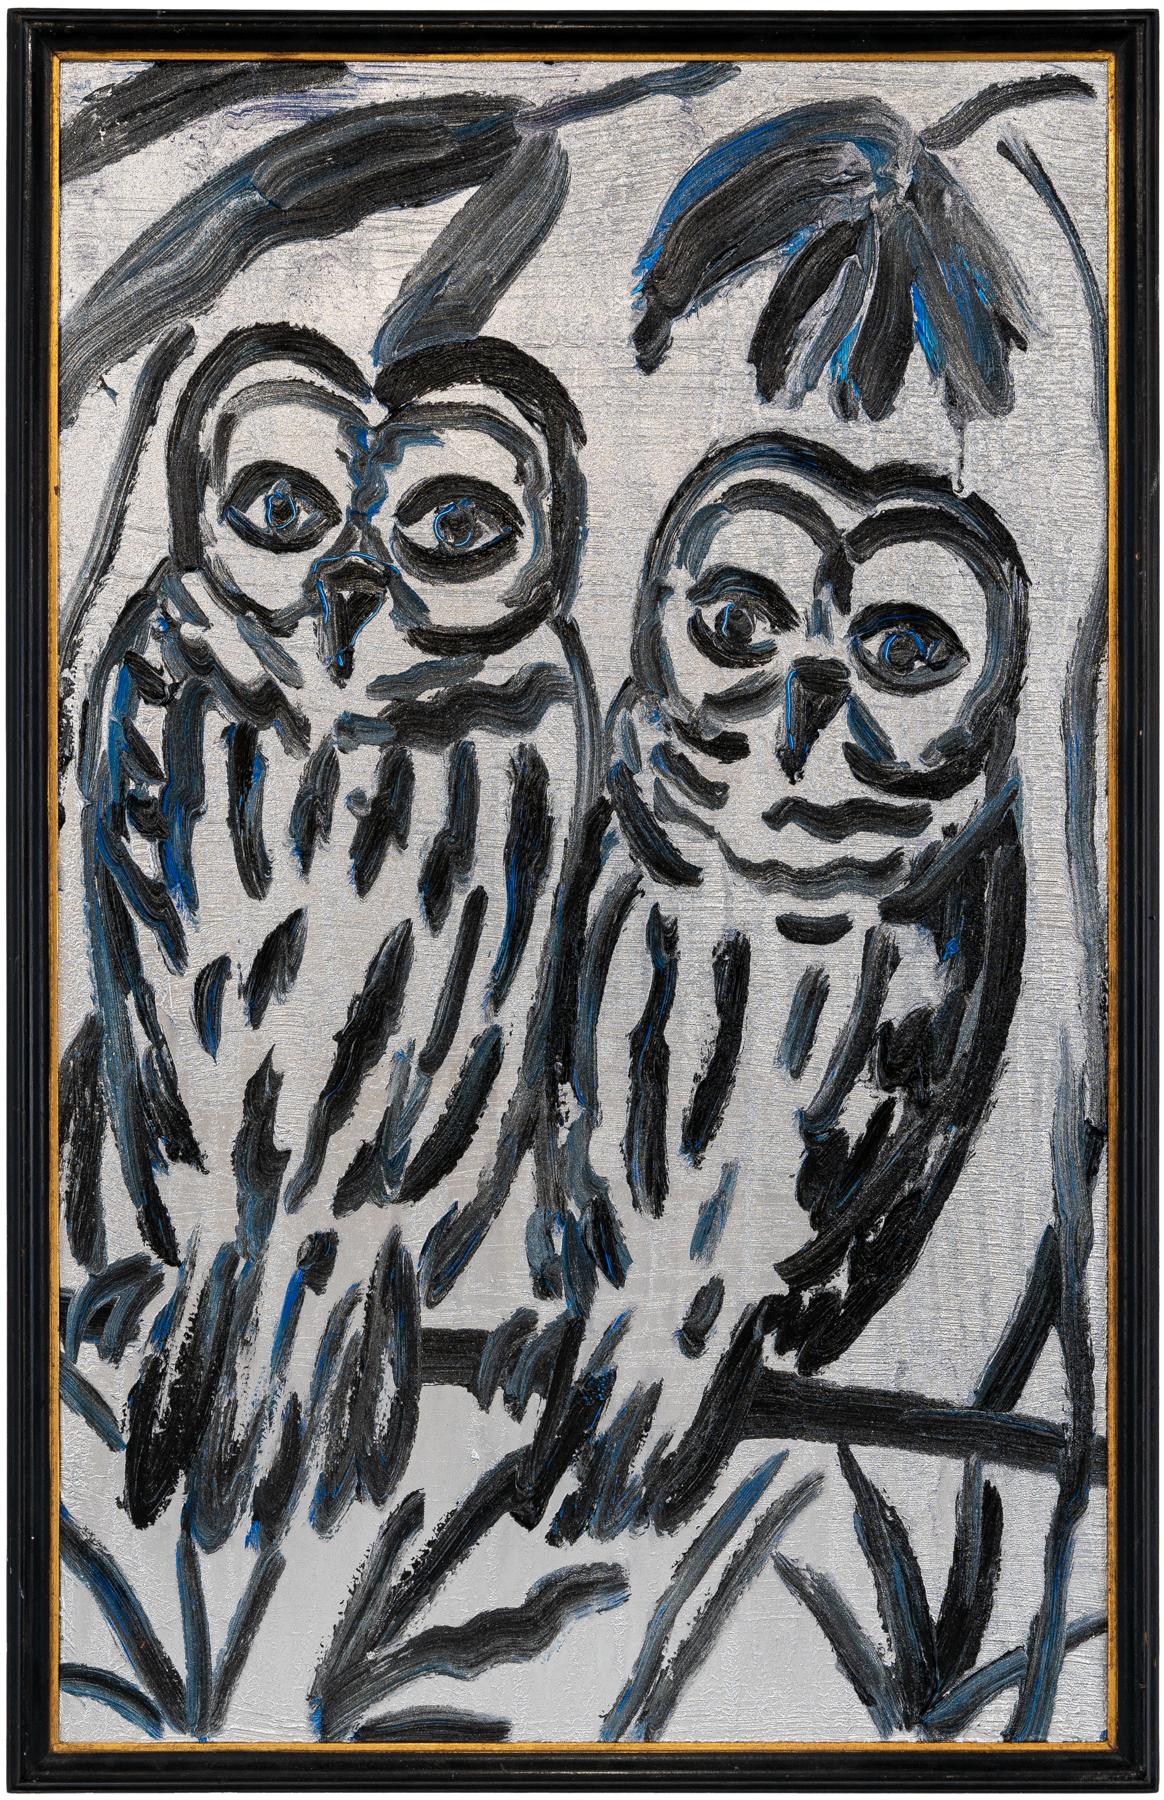 Pair Owls - Painting by Hunt Slonem